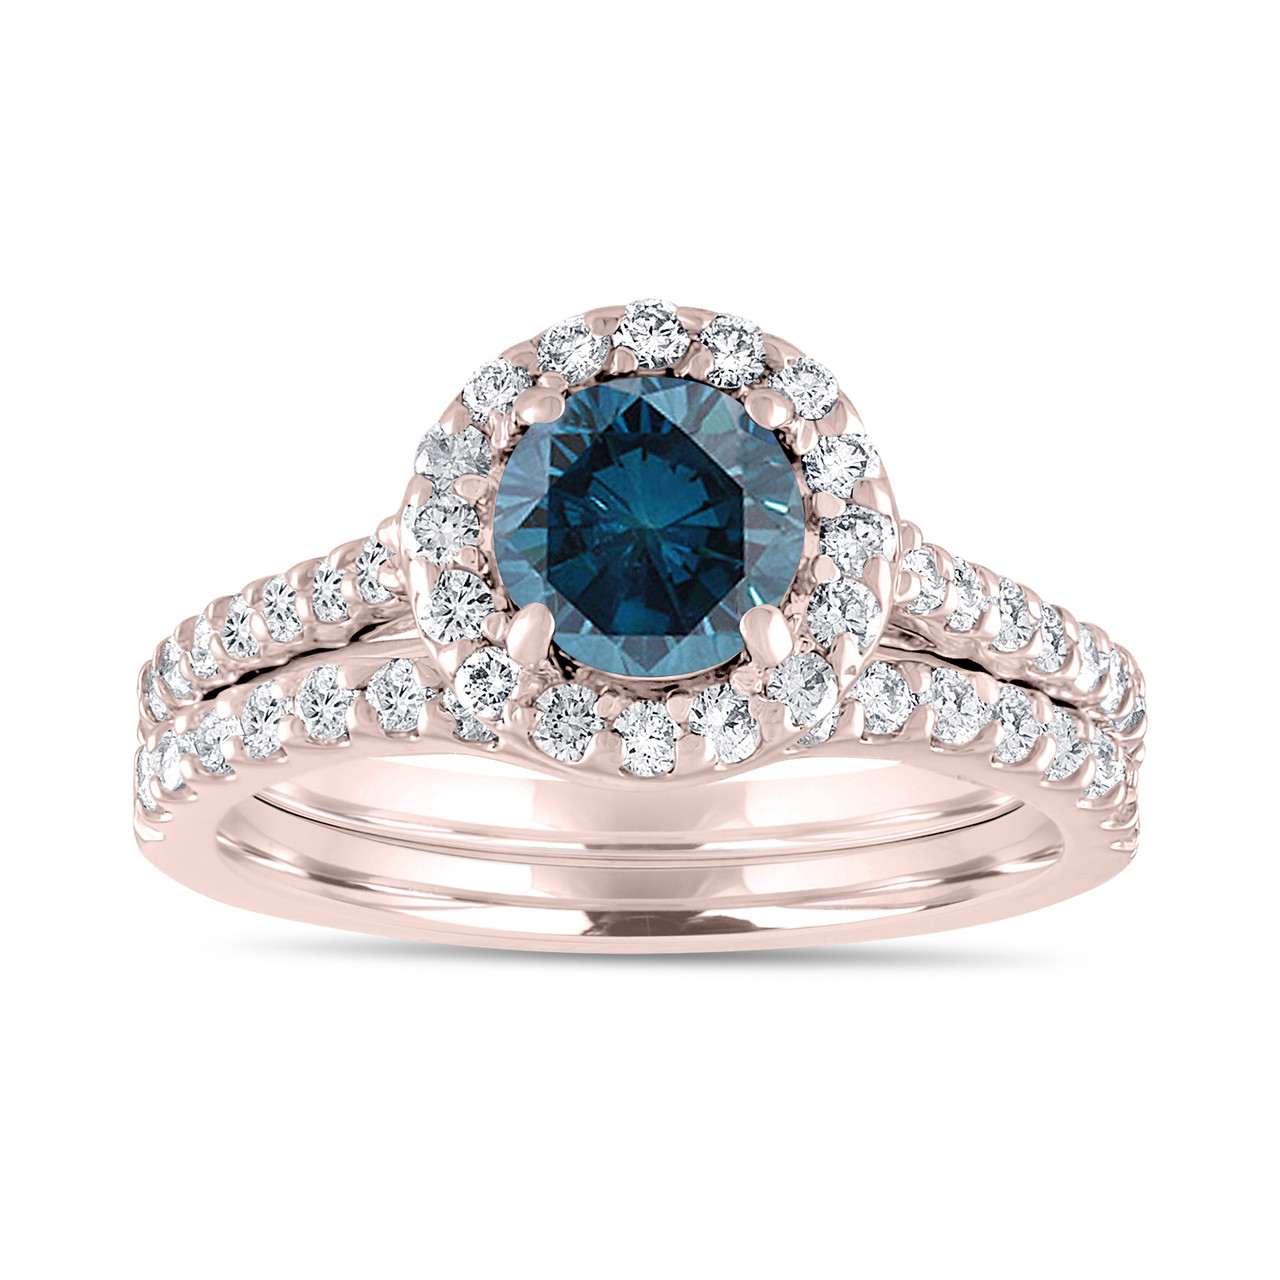 Blue Wedding Ring Set
 1 84 Carat Fancy Blue Diamond Engagement Ring Set Bridal